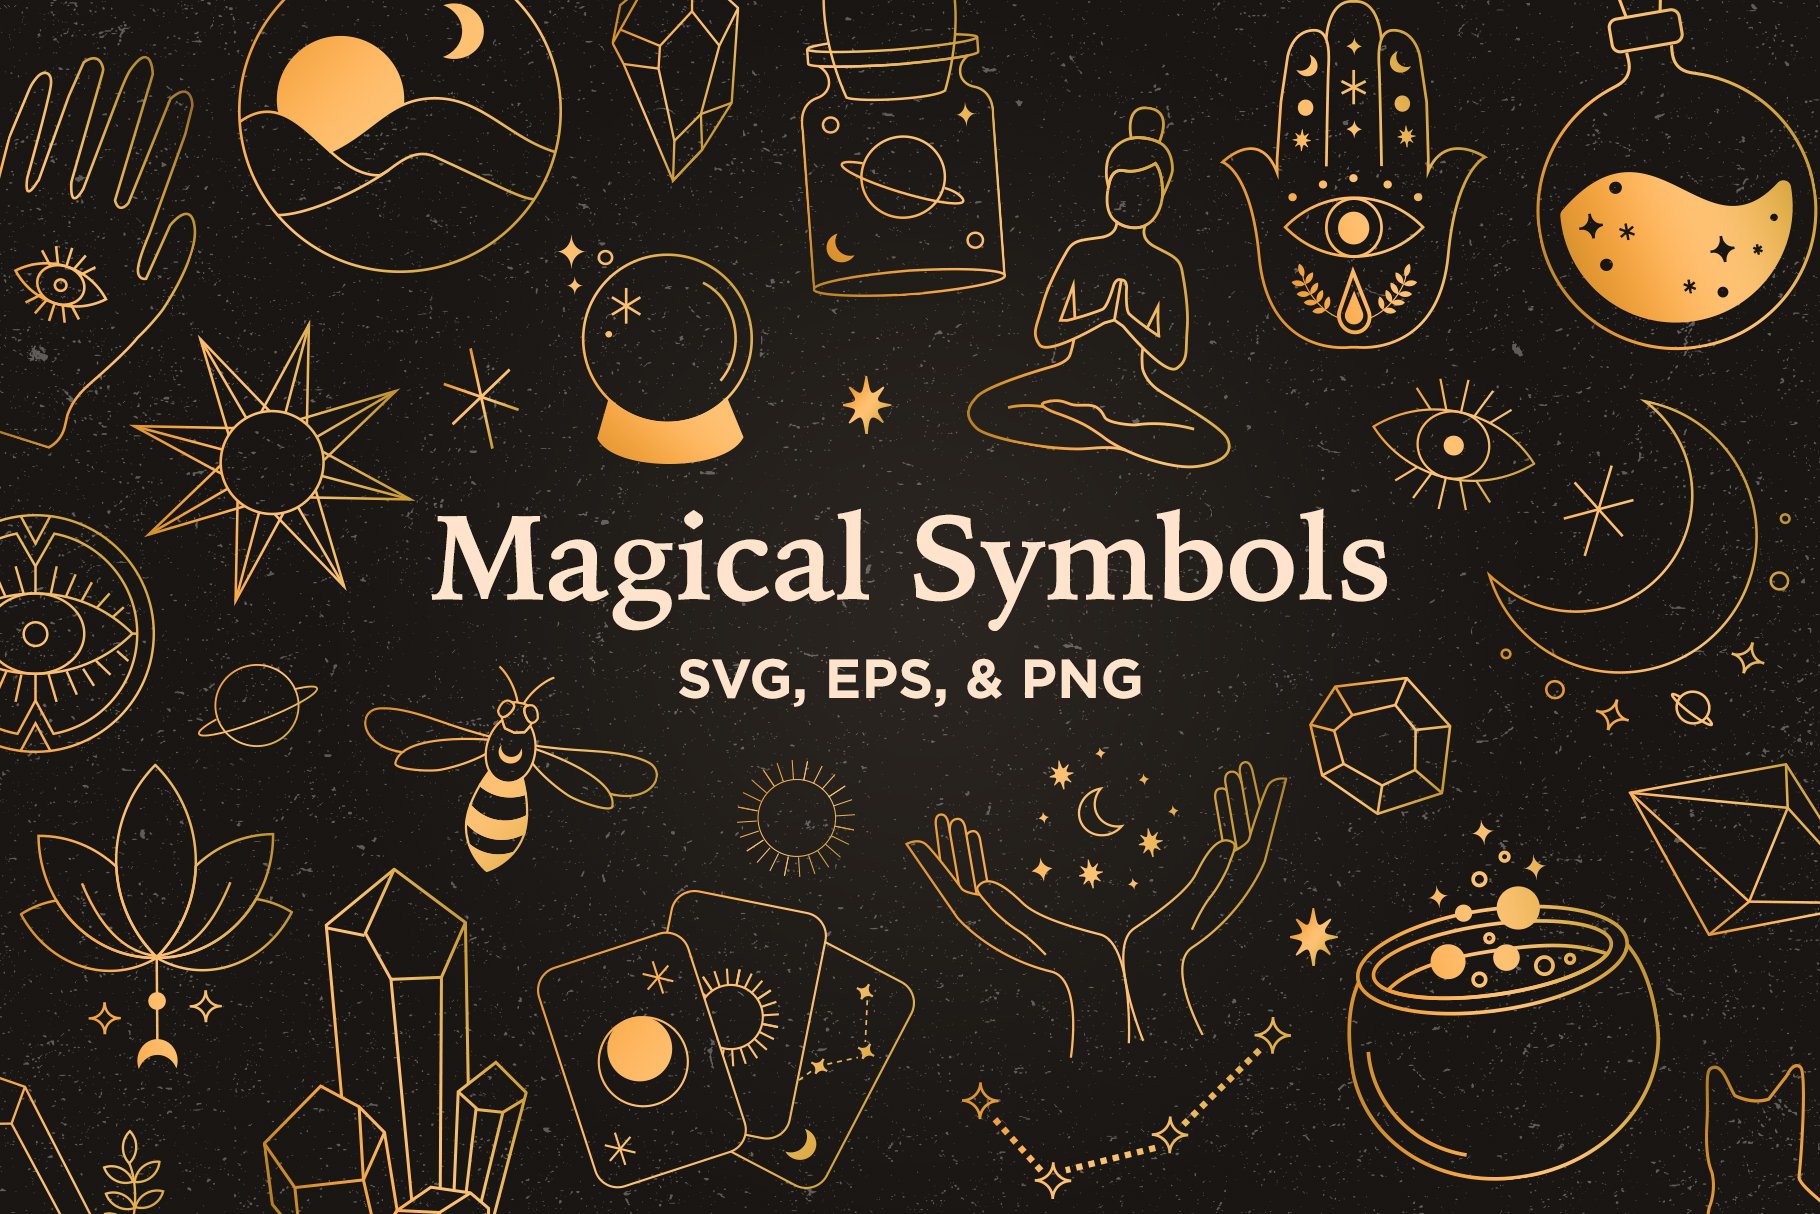 30 Magical Symbols | SVG, PNG & EPS cover image.